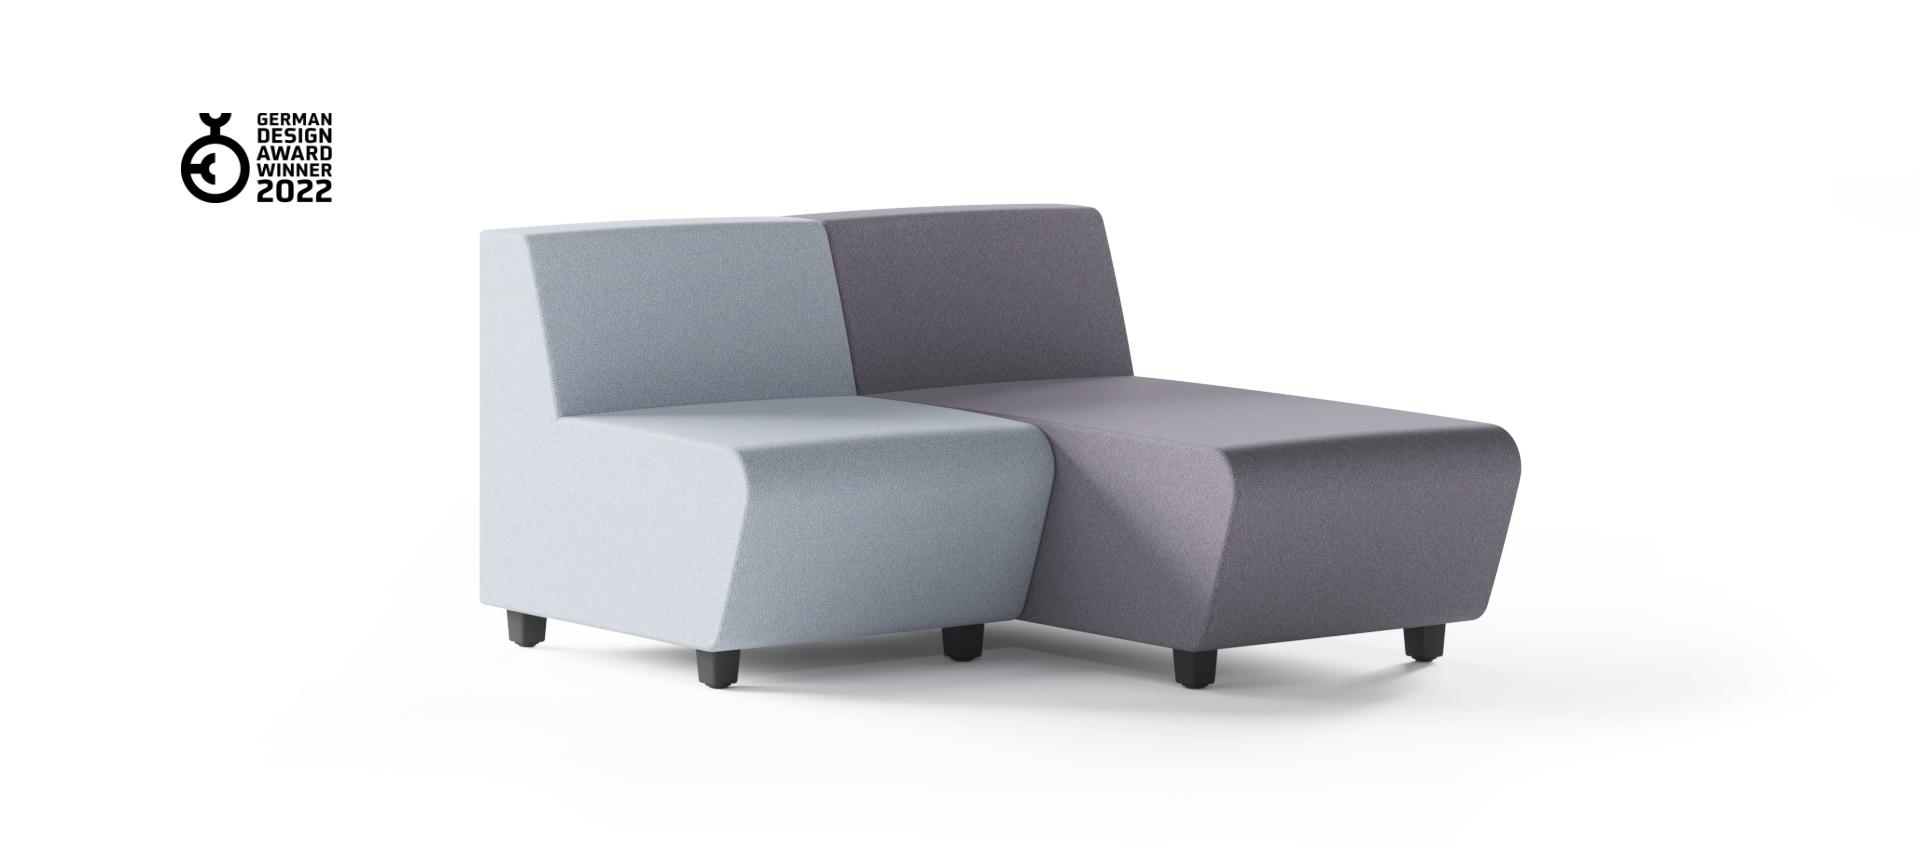 Lounge Sessel Schule ideal für moderne Sitzgruppen